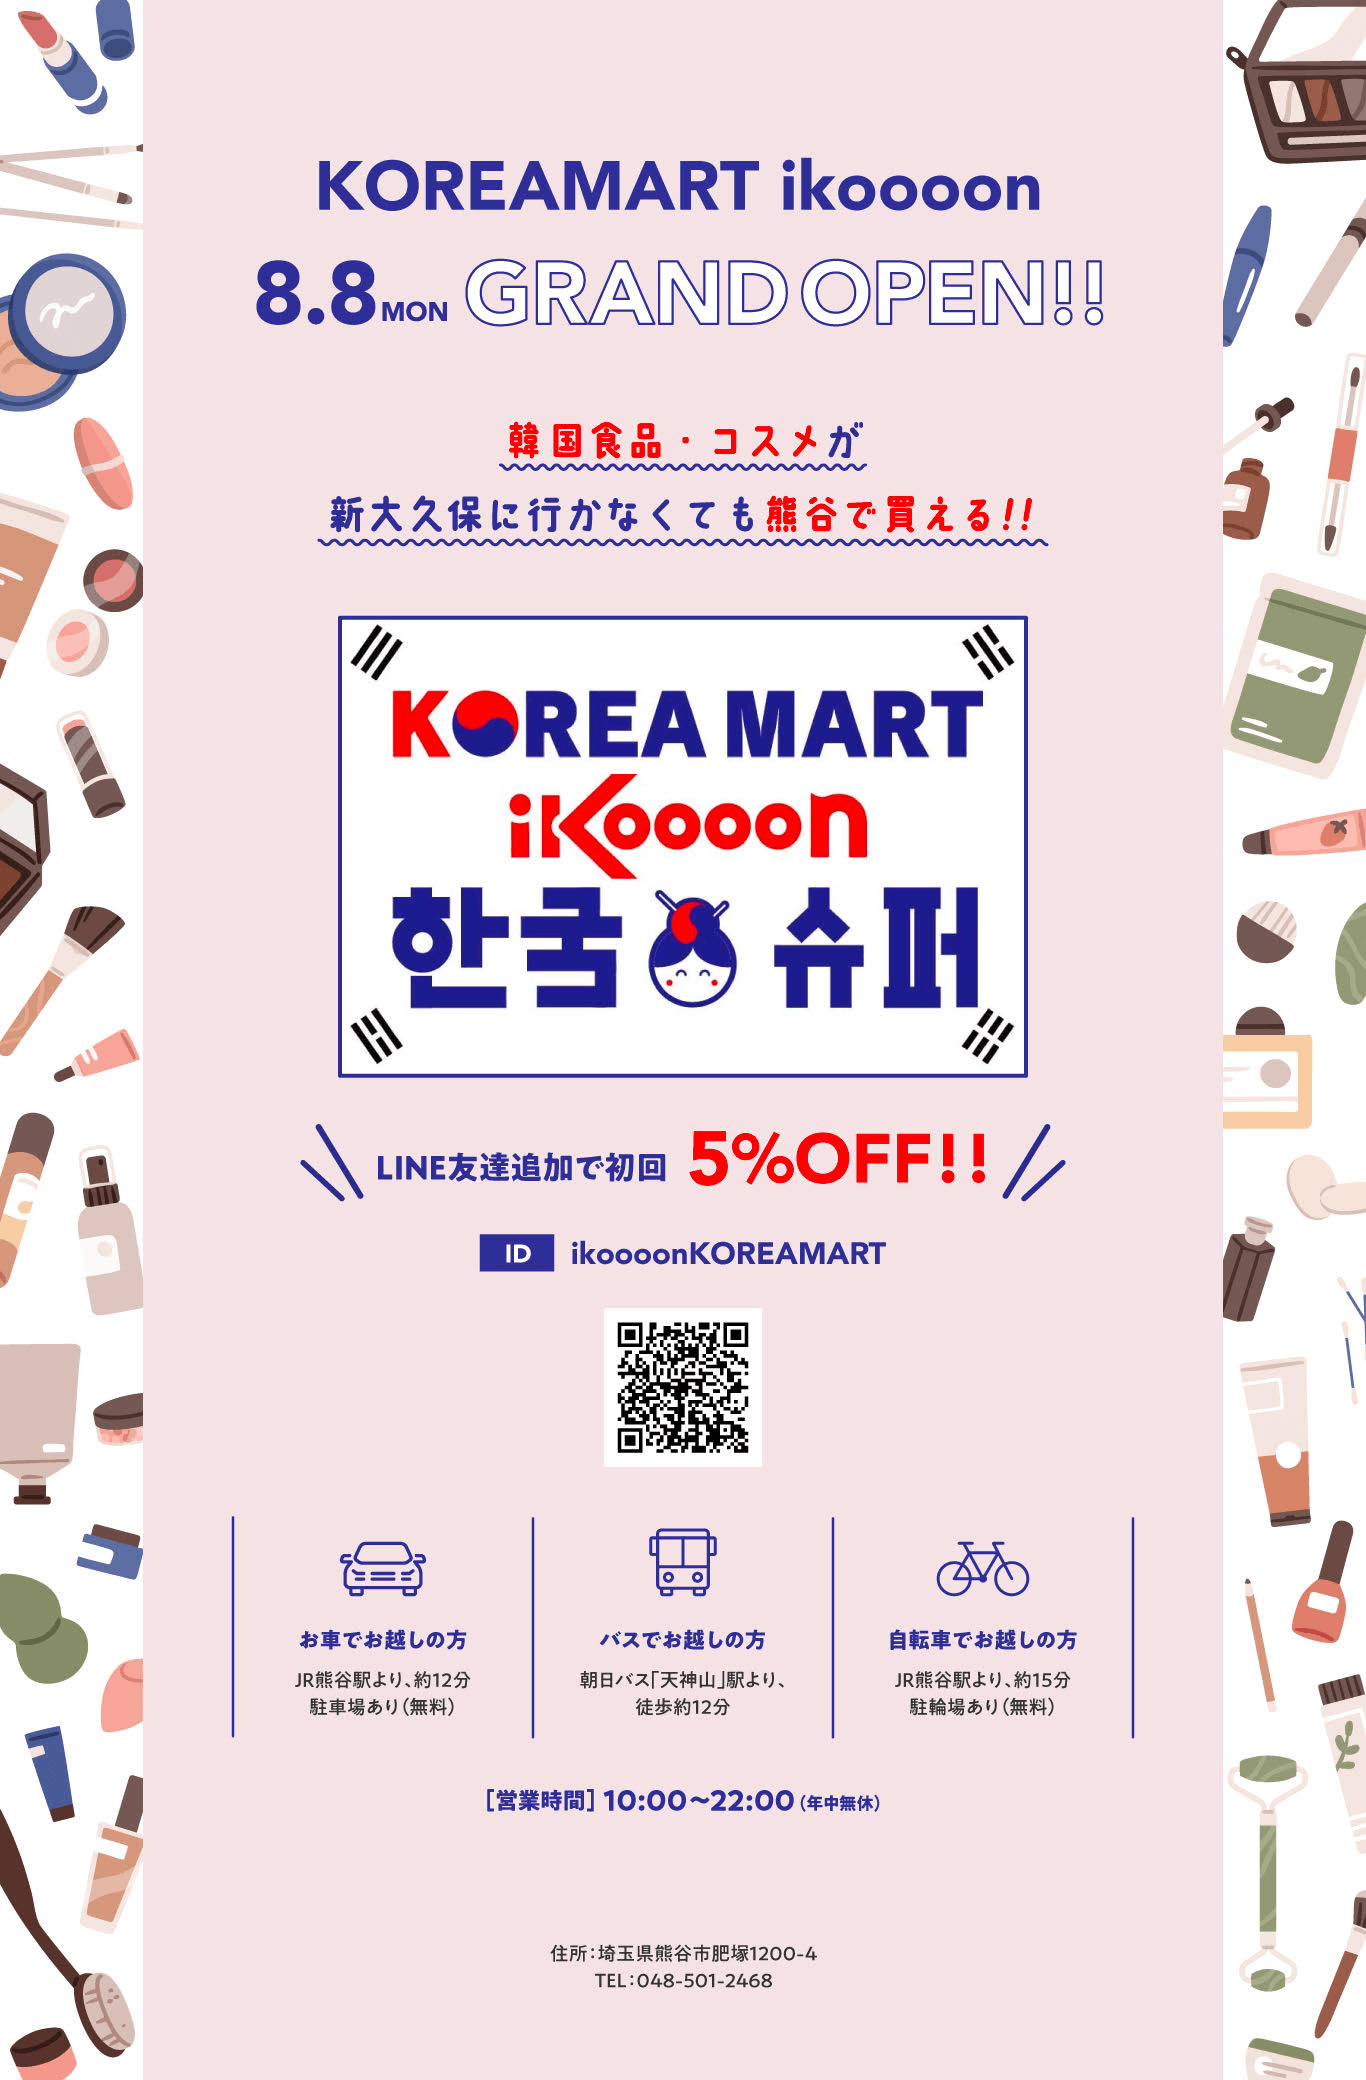 「KOREAMART ikoooon」 8.8(MON) GRAND OPEN！！ 韓国食品・コスメが新大久保に行かなくても熊谷で買える！！